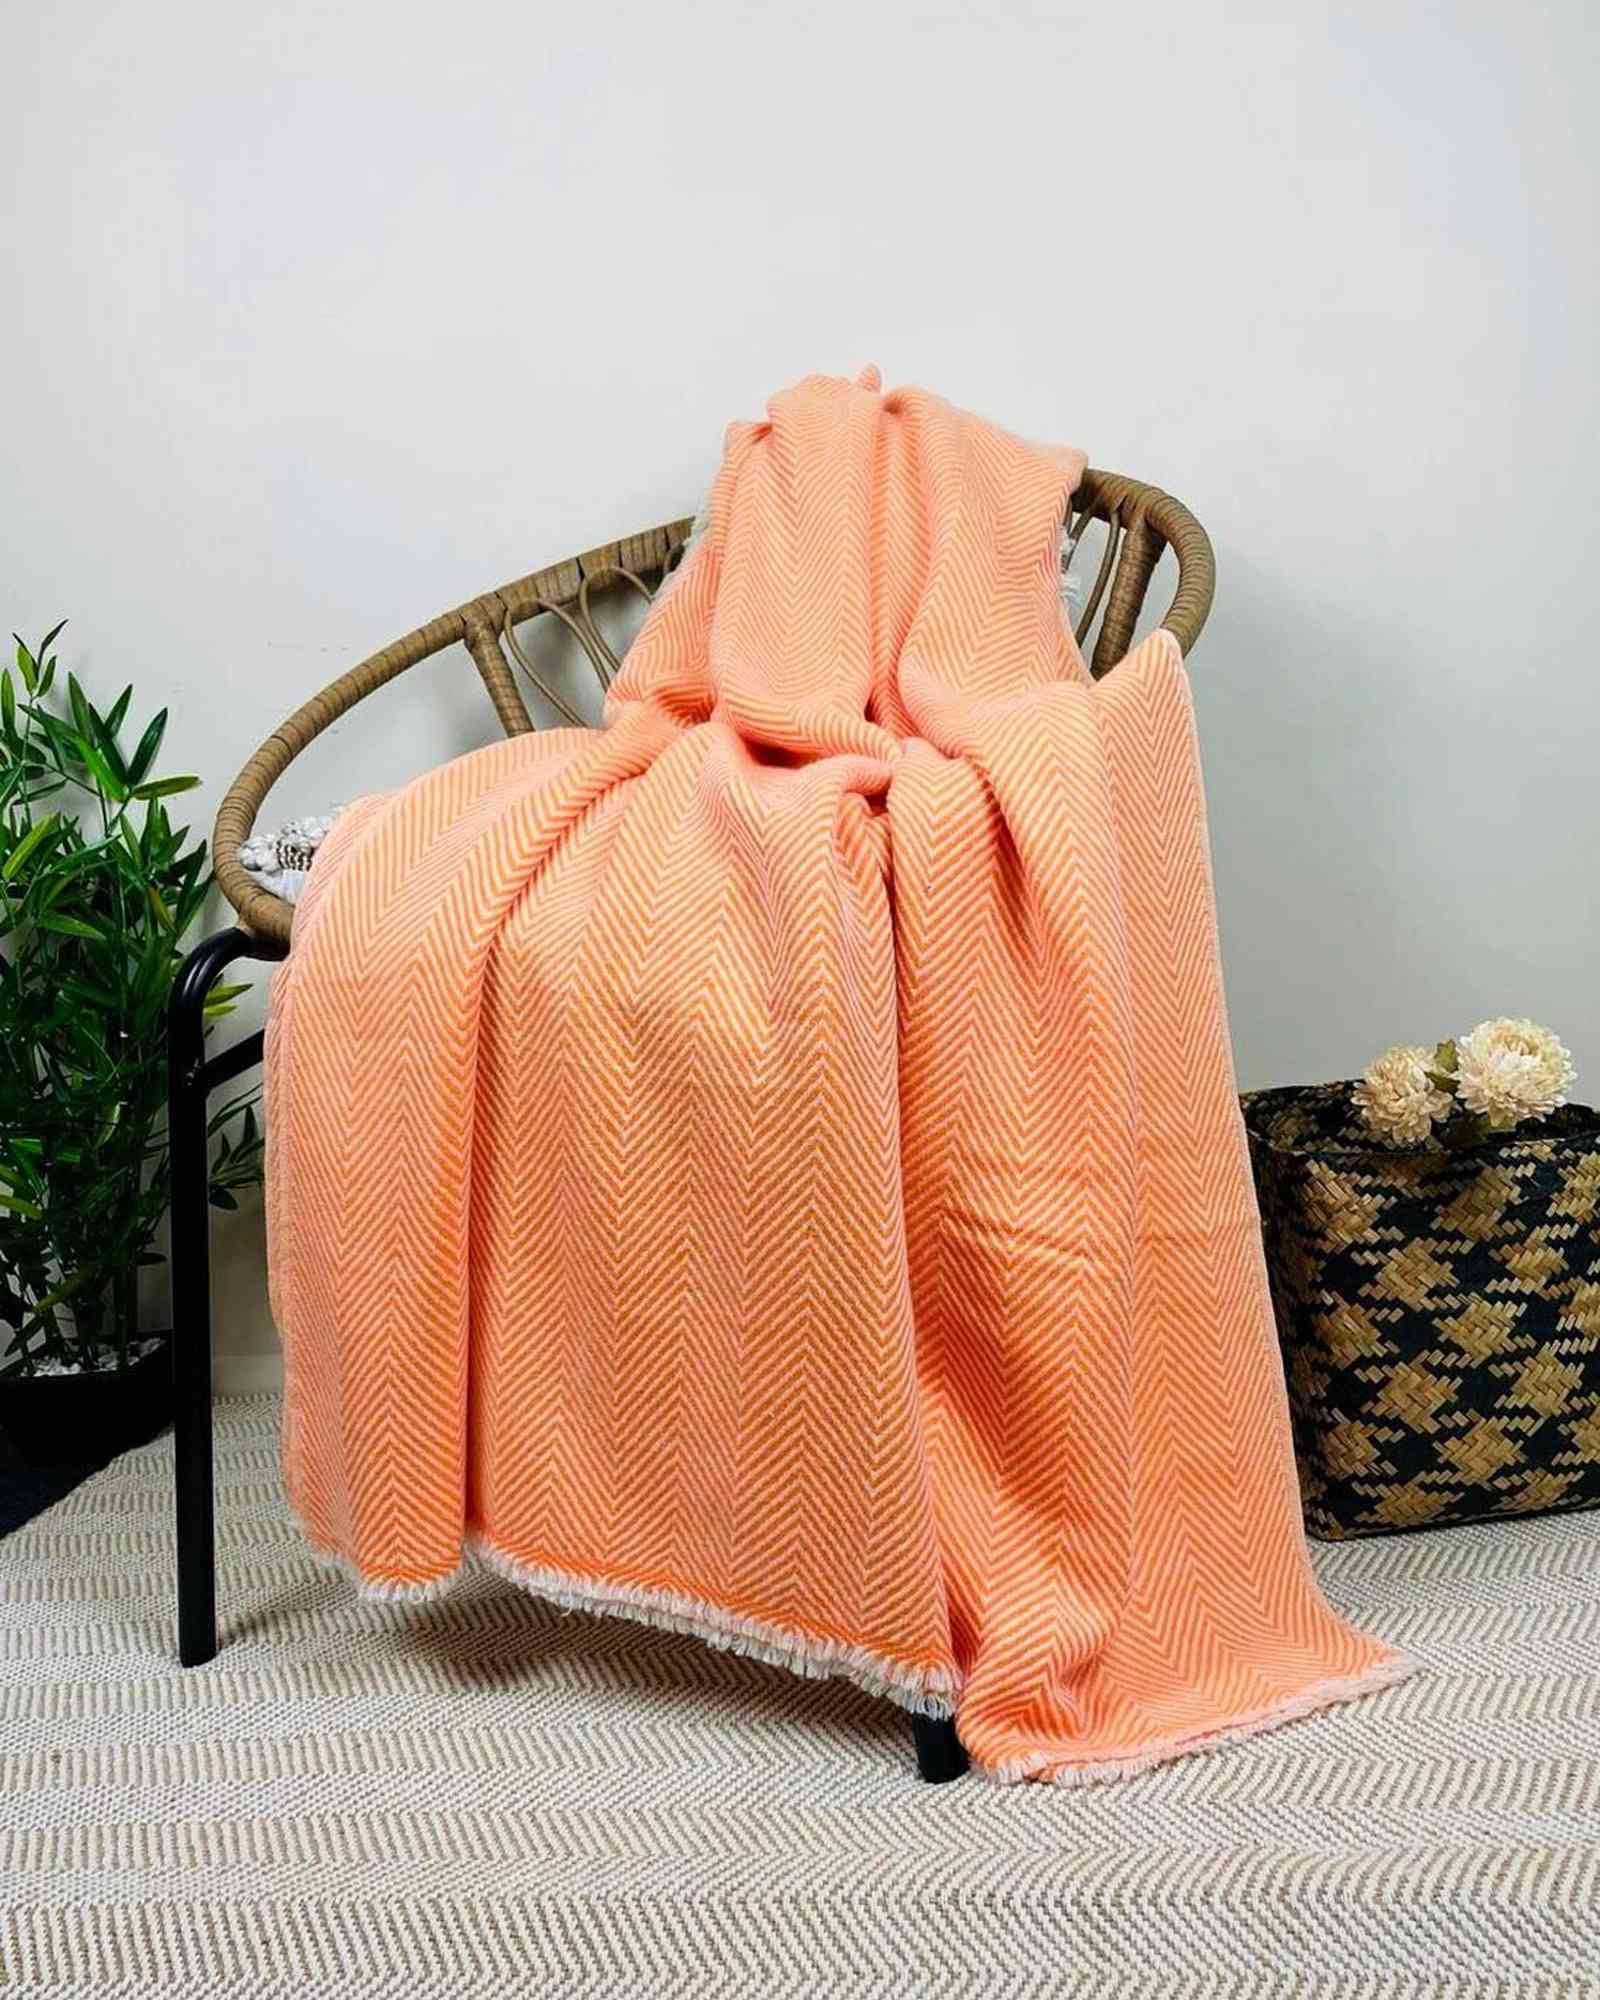 100% Pure Cashmere Blanket/Throw. Handmade in Nepal